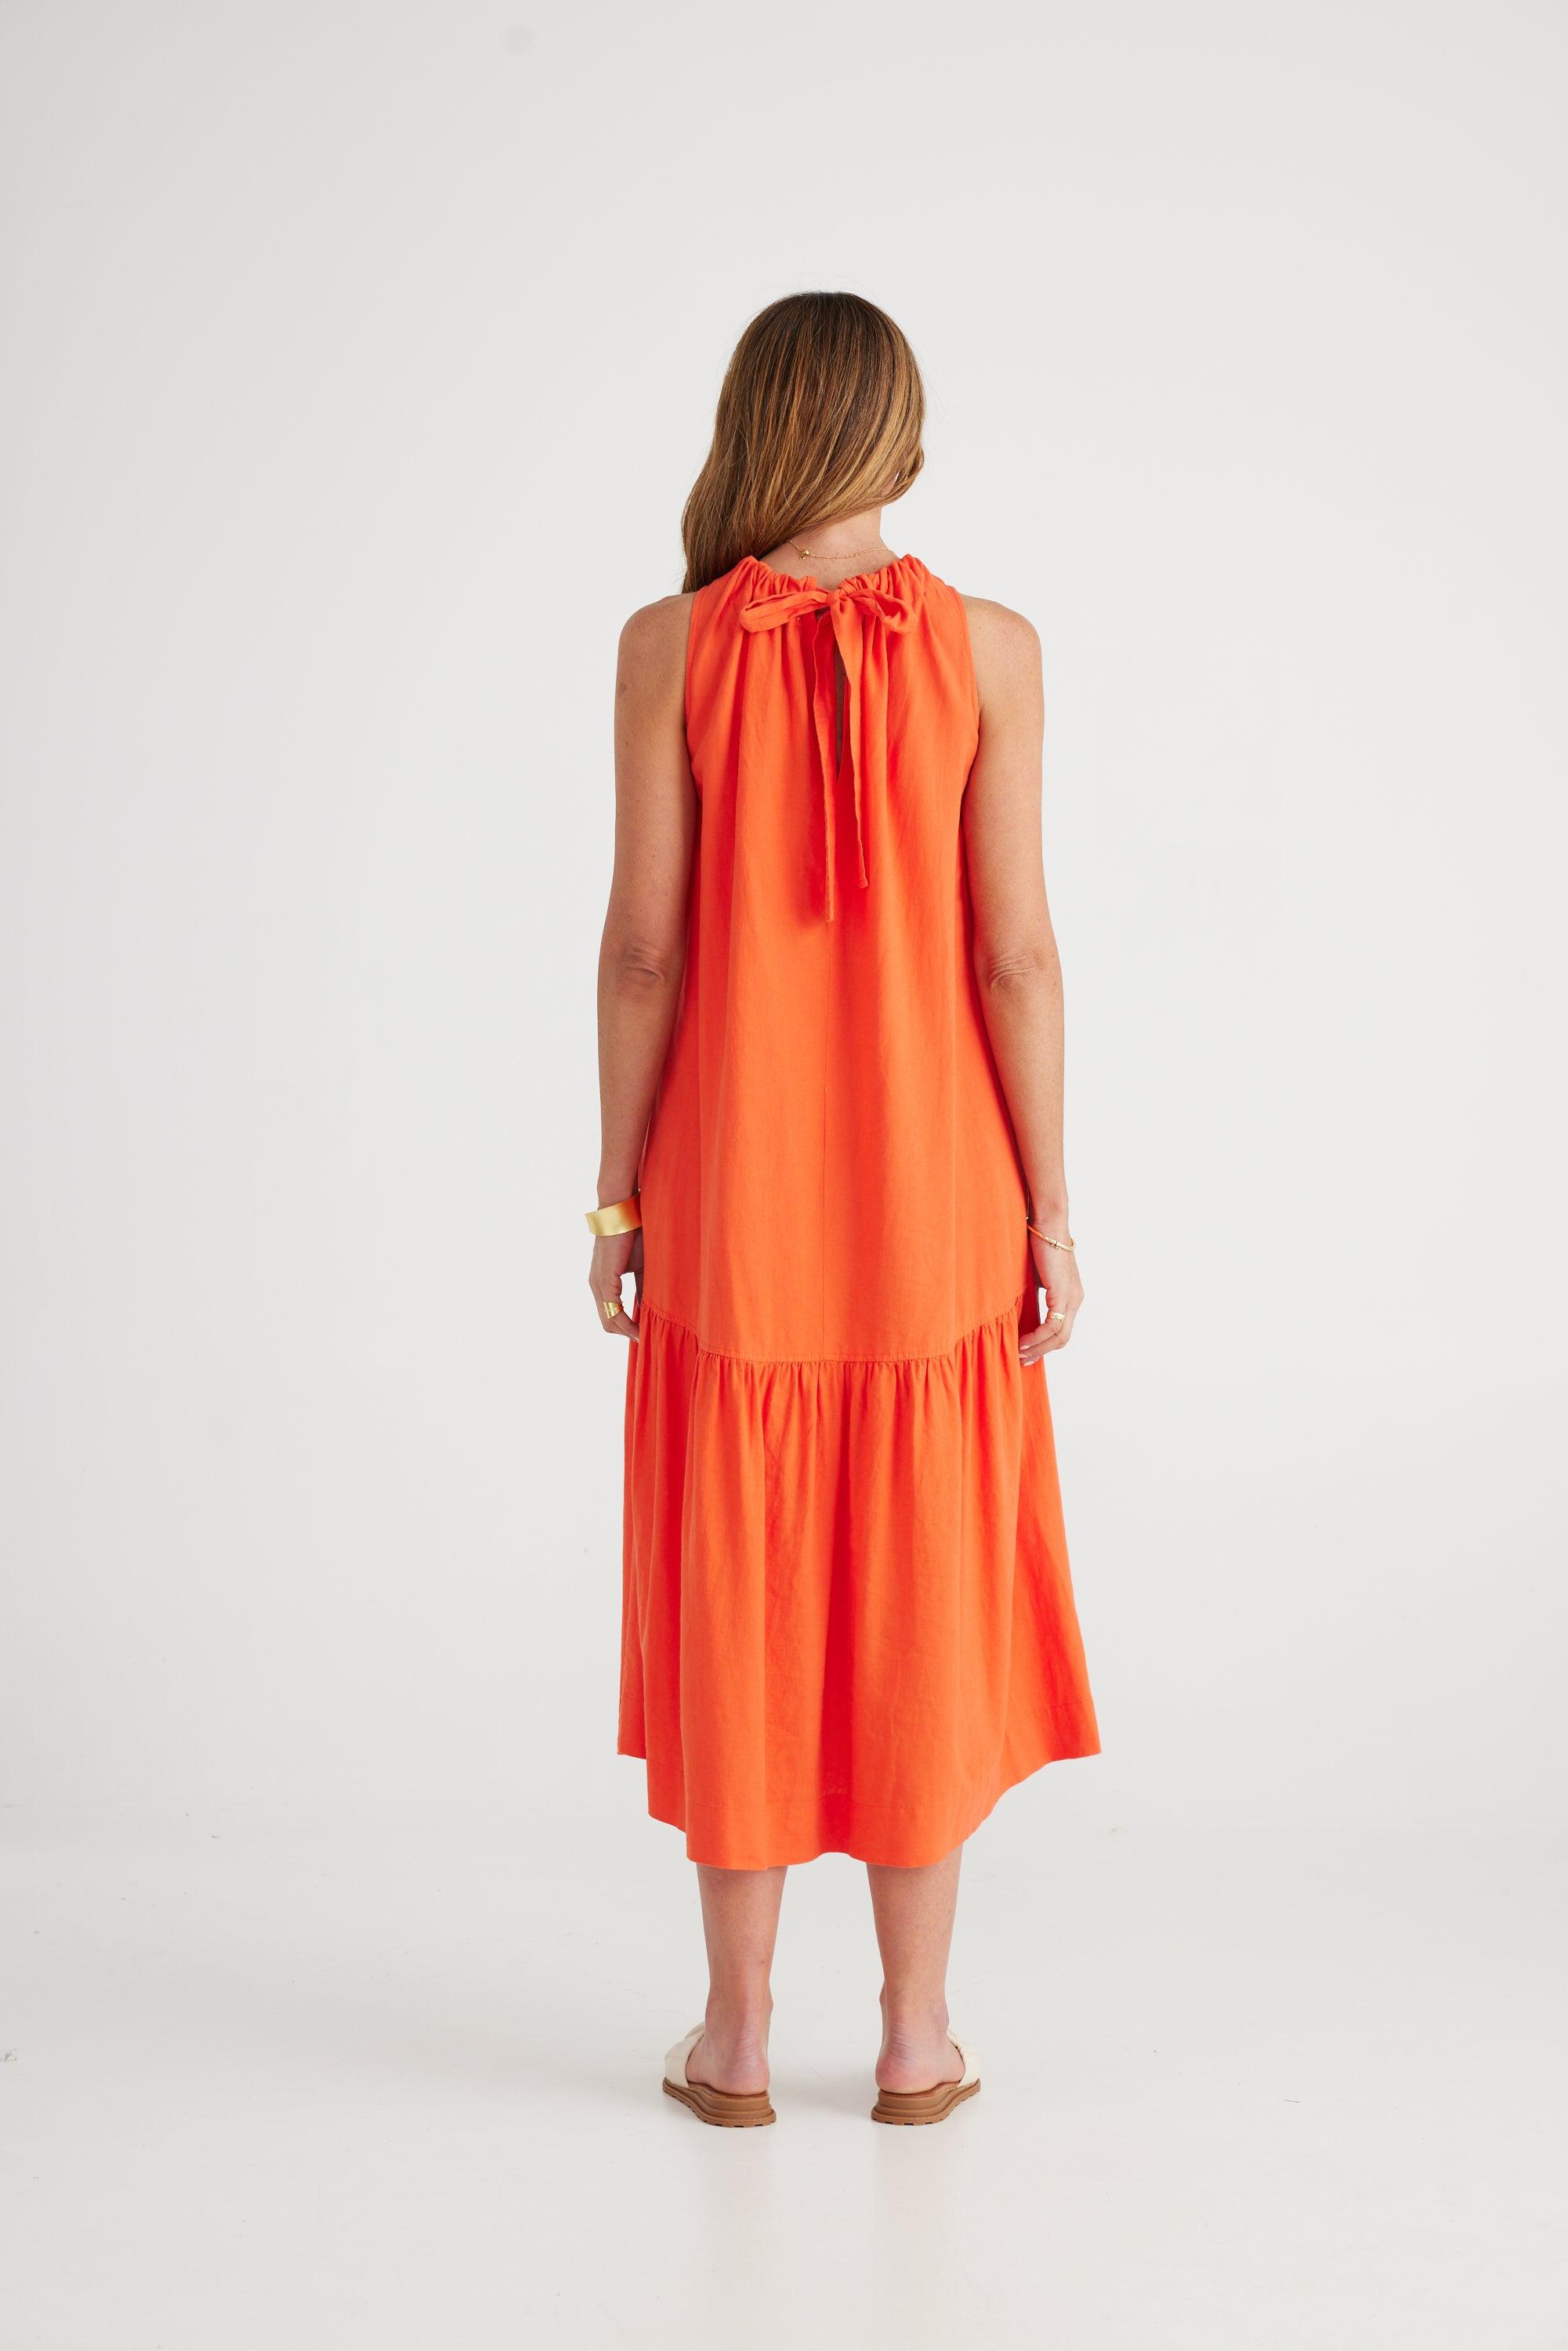 Koral Dress - Mandarin-Dresses-Brave & True-The Bay Room